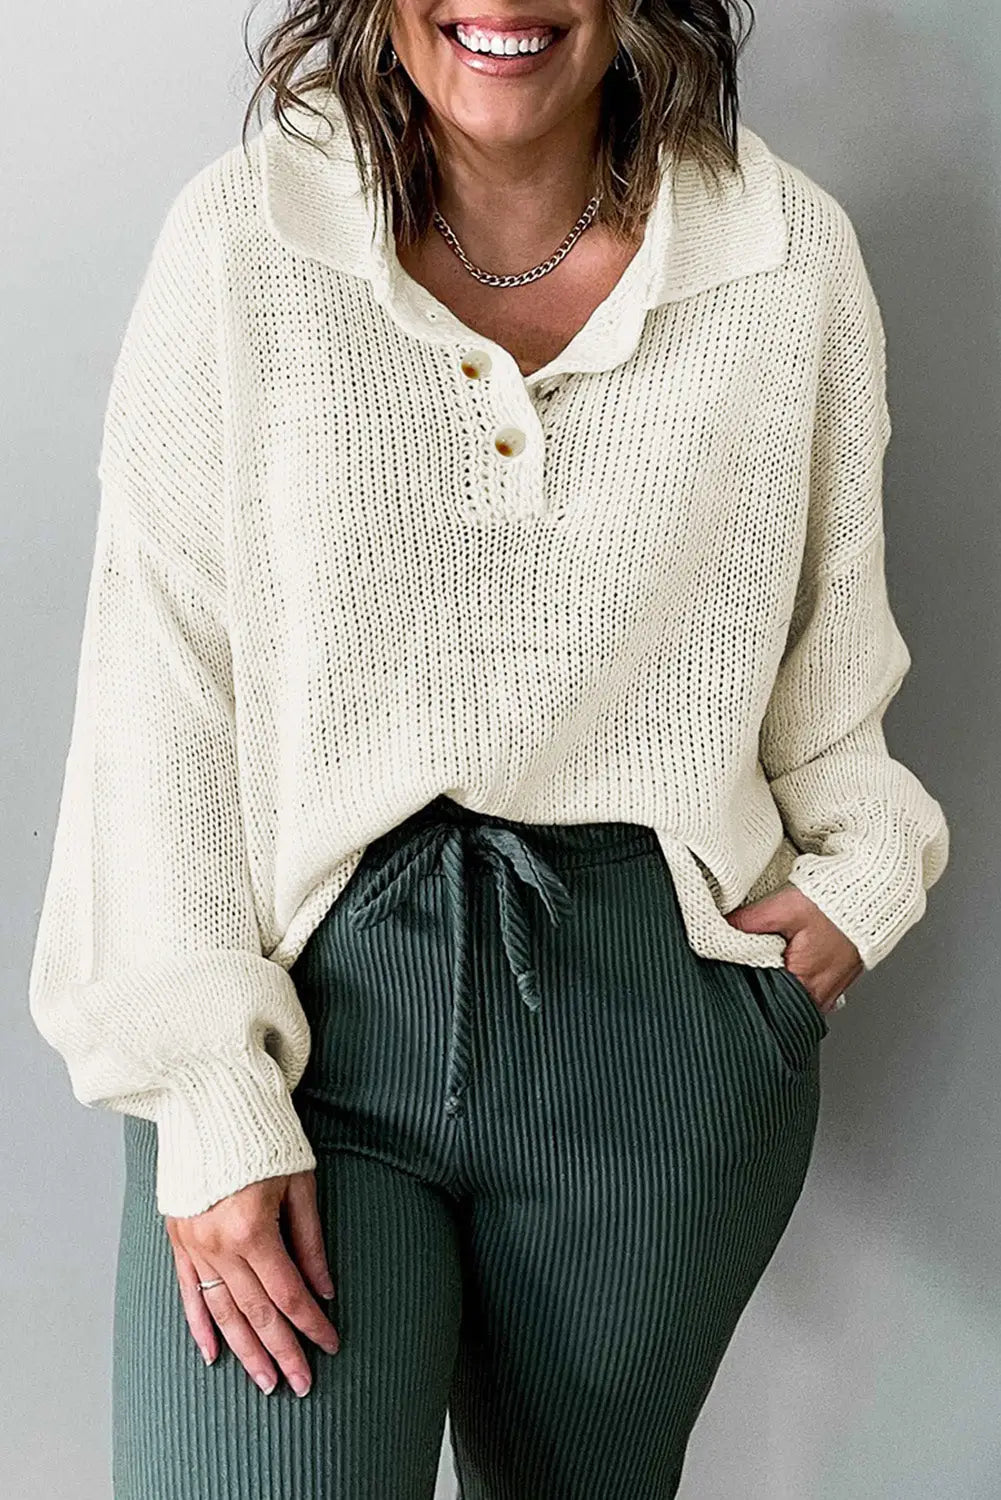 Beige plus size polo sweater - 1x 60% cotton + 40% acrylic